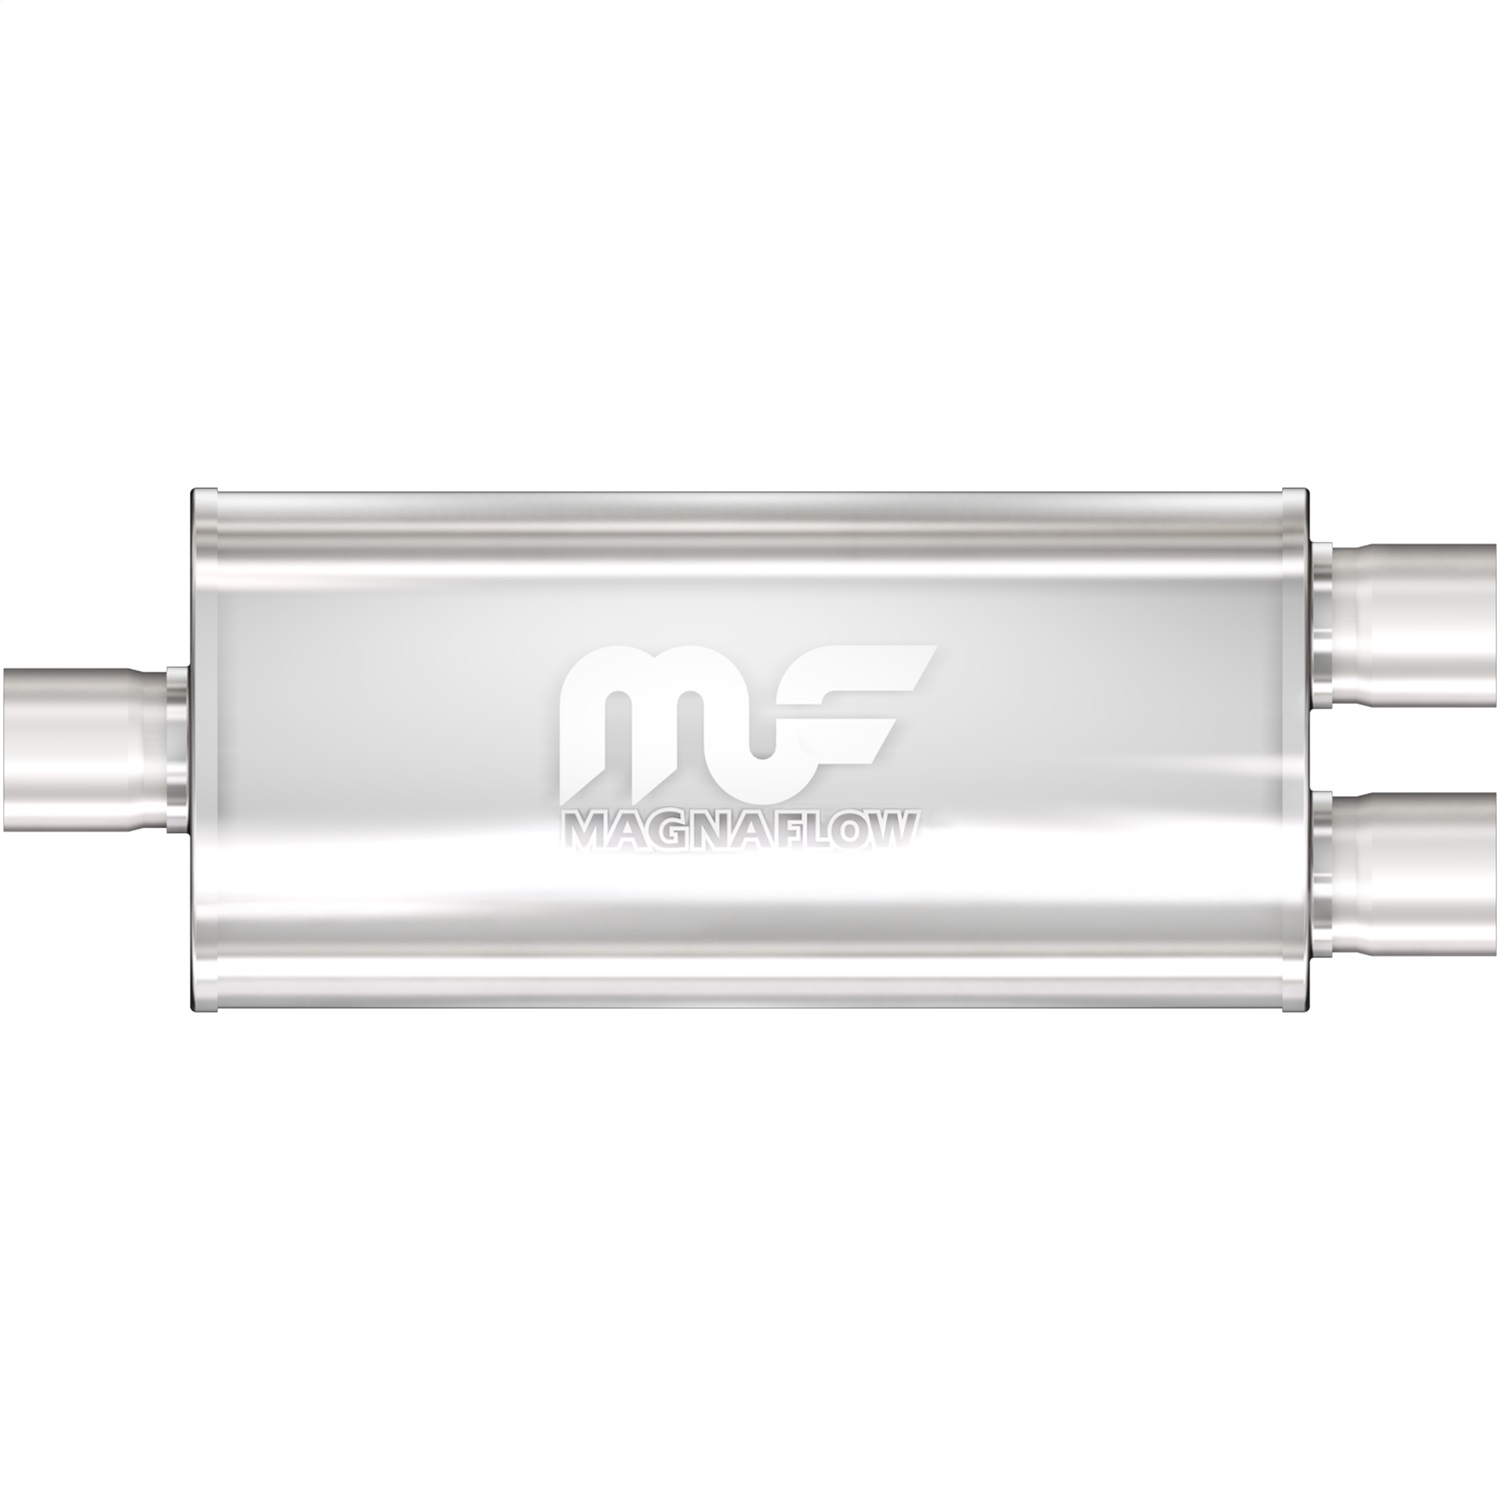 Magnaflow Performance Exhaust Magnaflow Performance Exhaust 12398 Stainless Steel Muffler